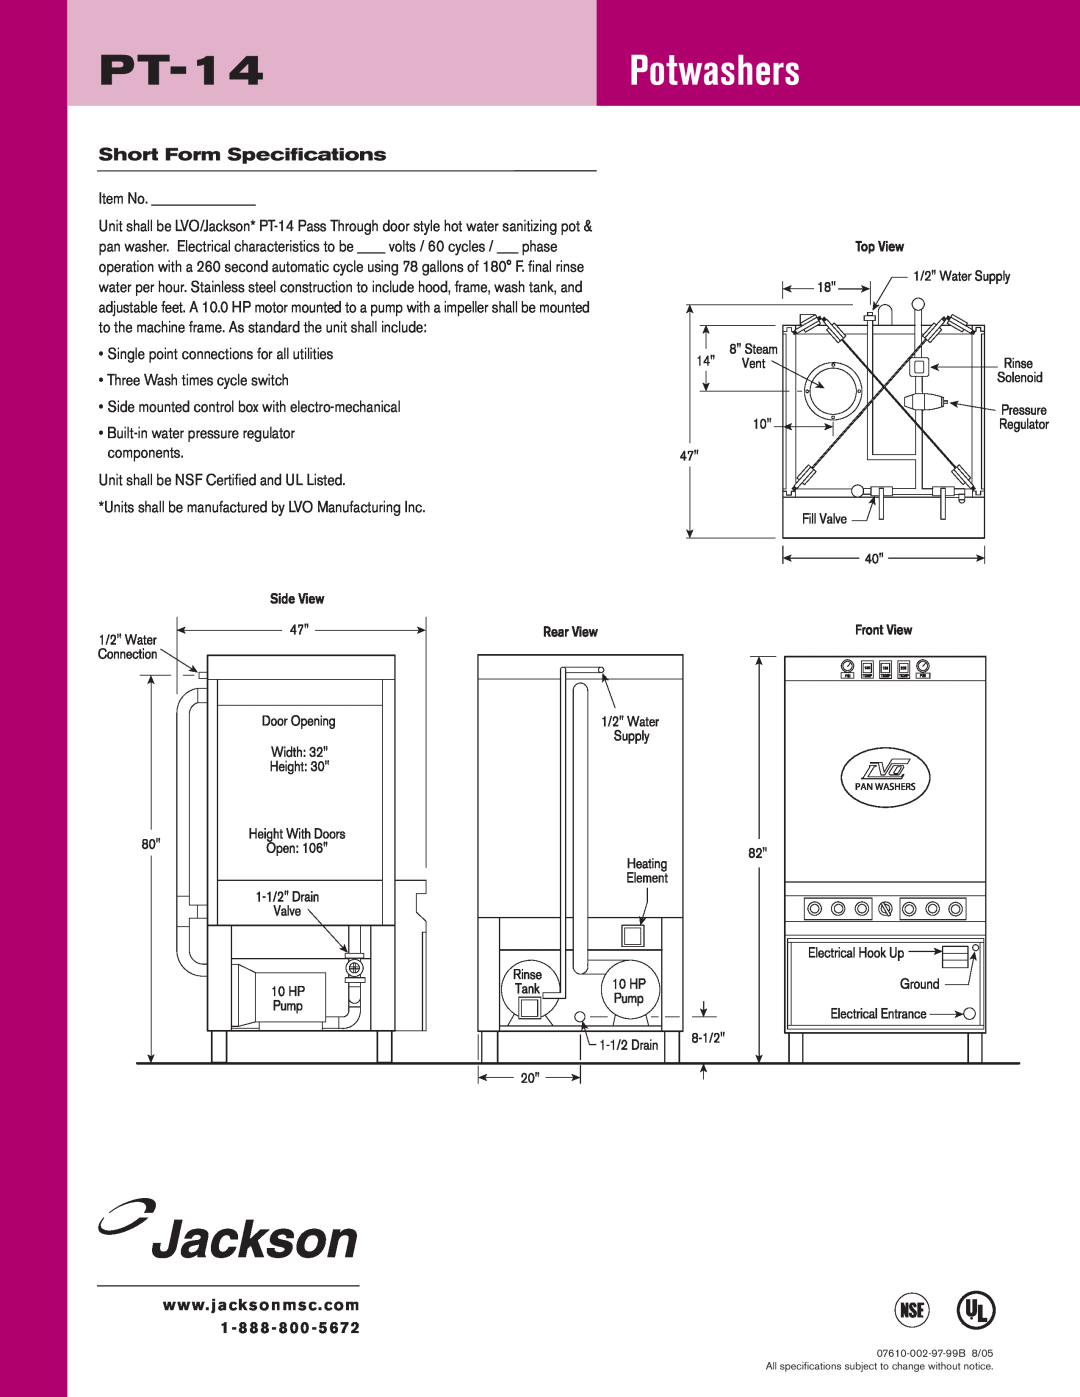 Jackson dimensions Short Form Specifications, PT-14Potwashers 